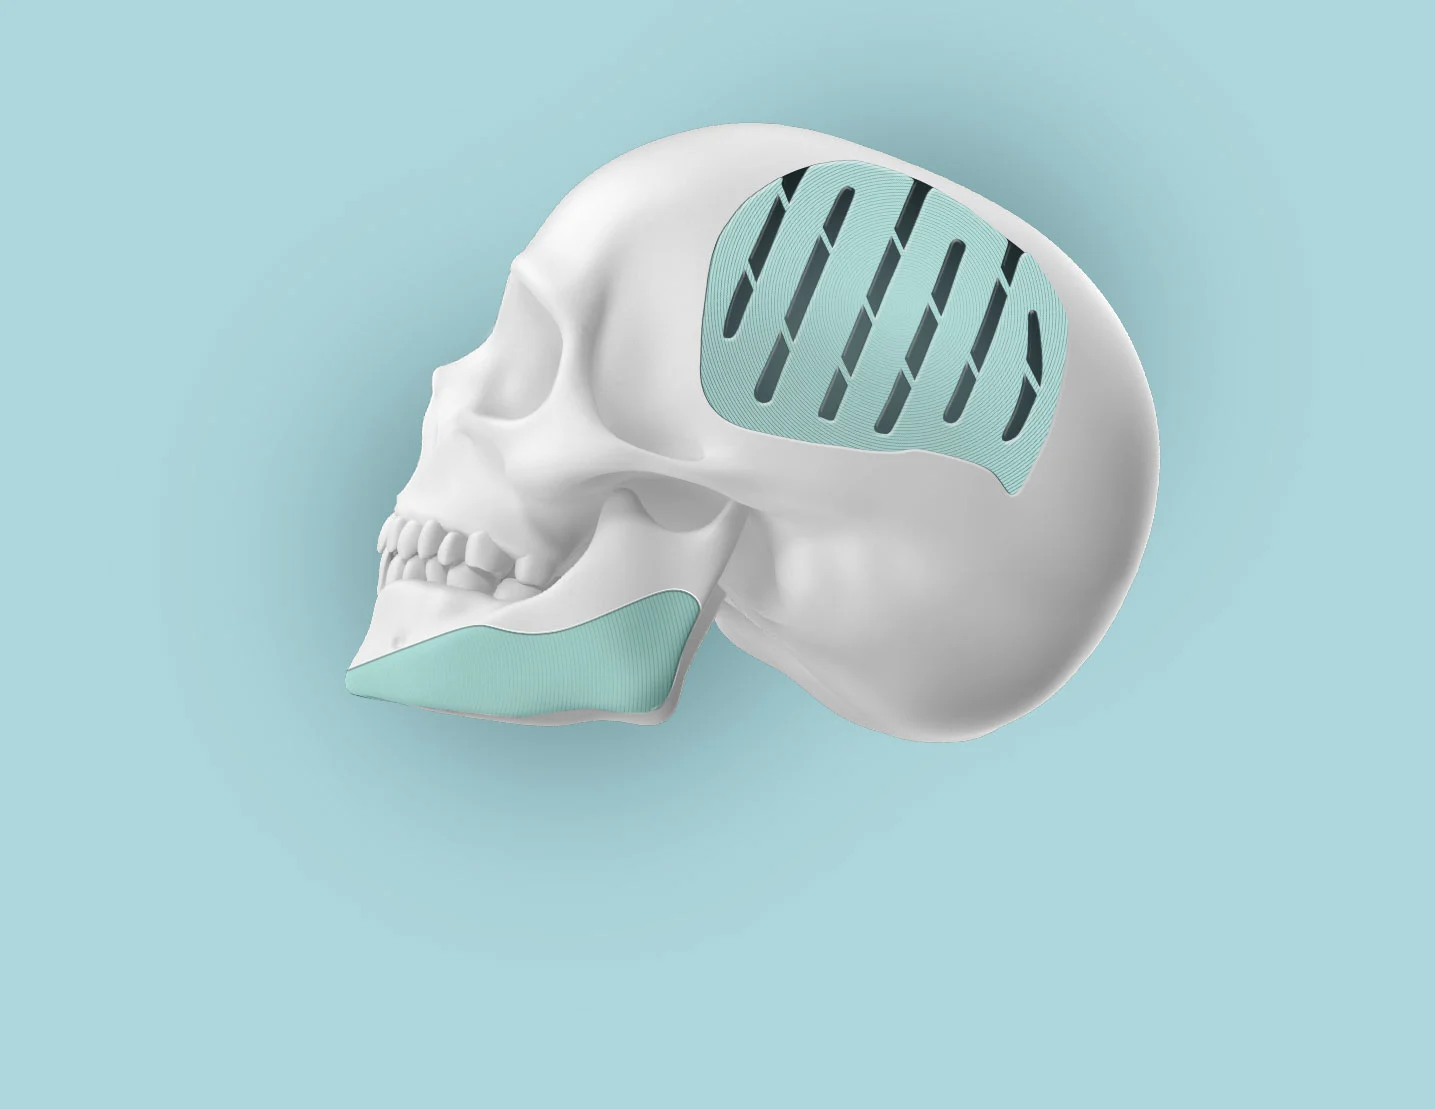 hero image presenting skull implant